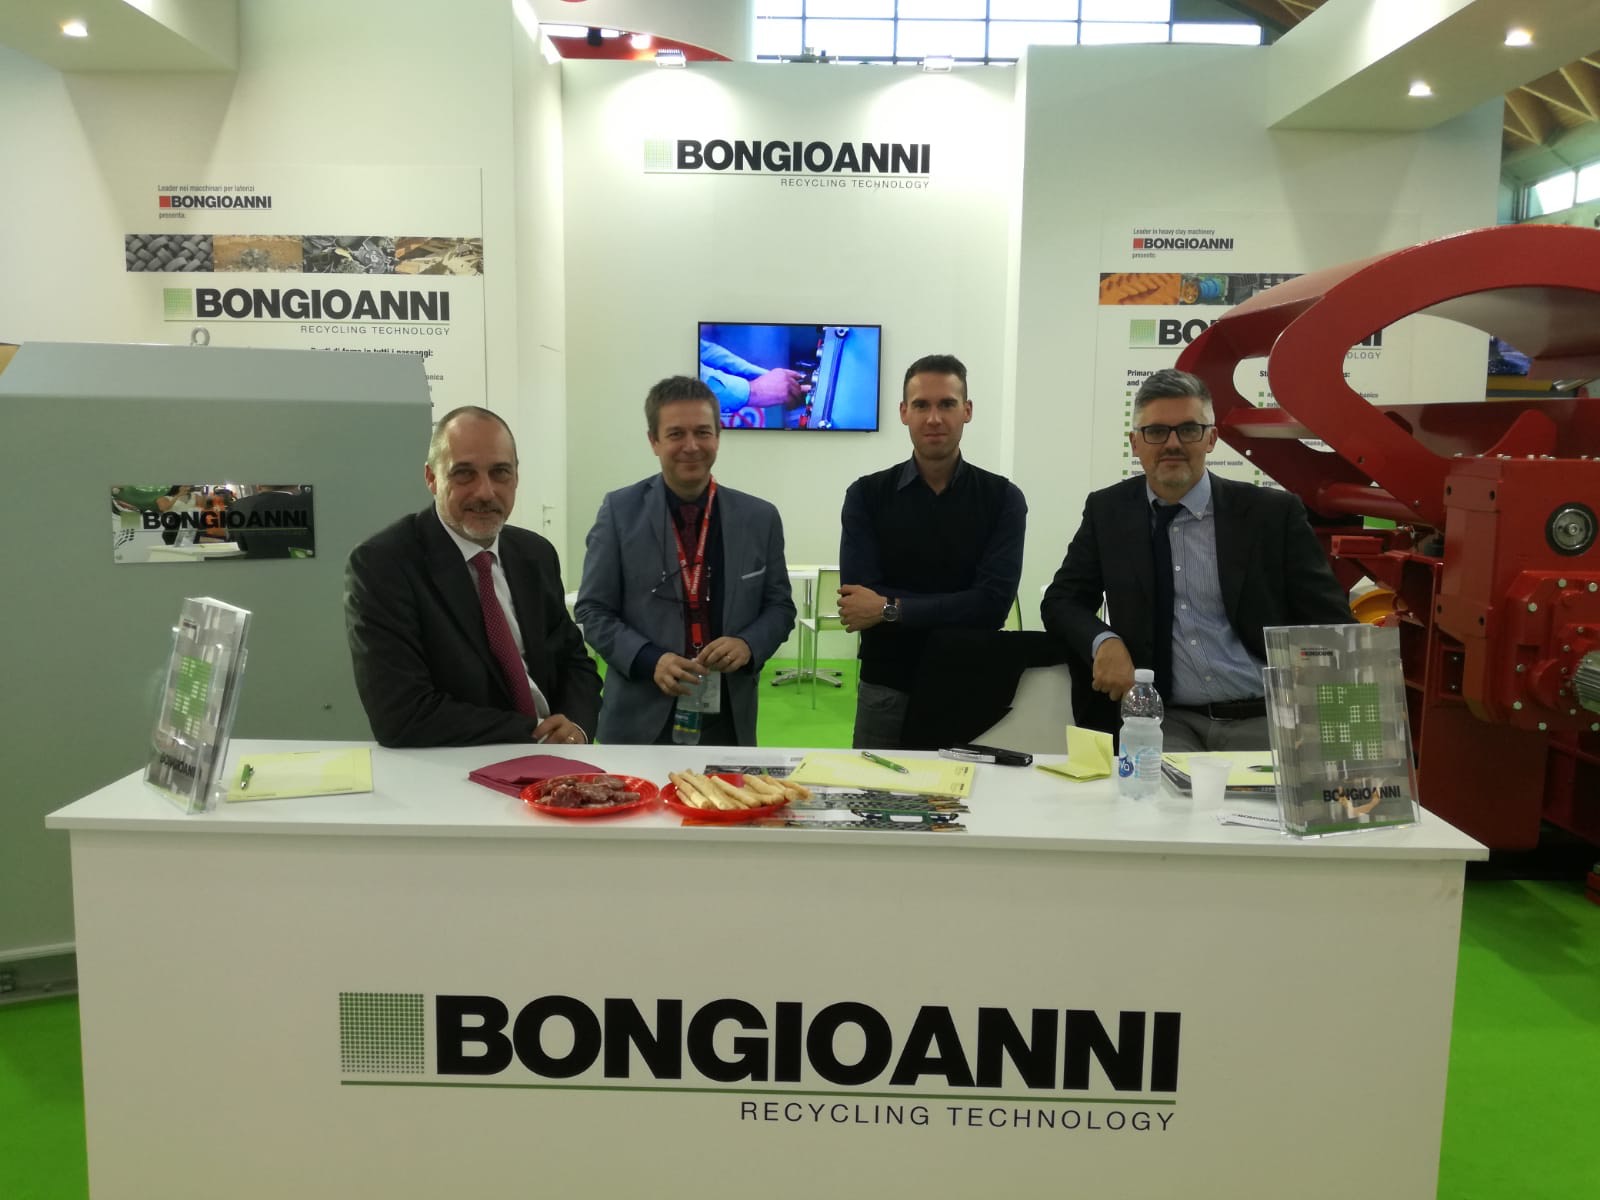 BongioanniRecycling Technology